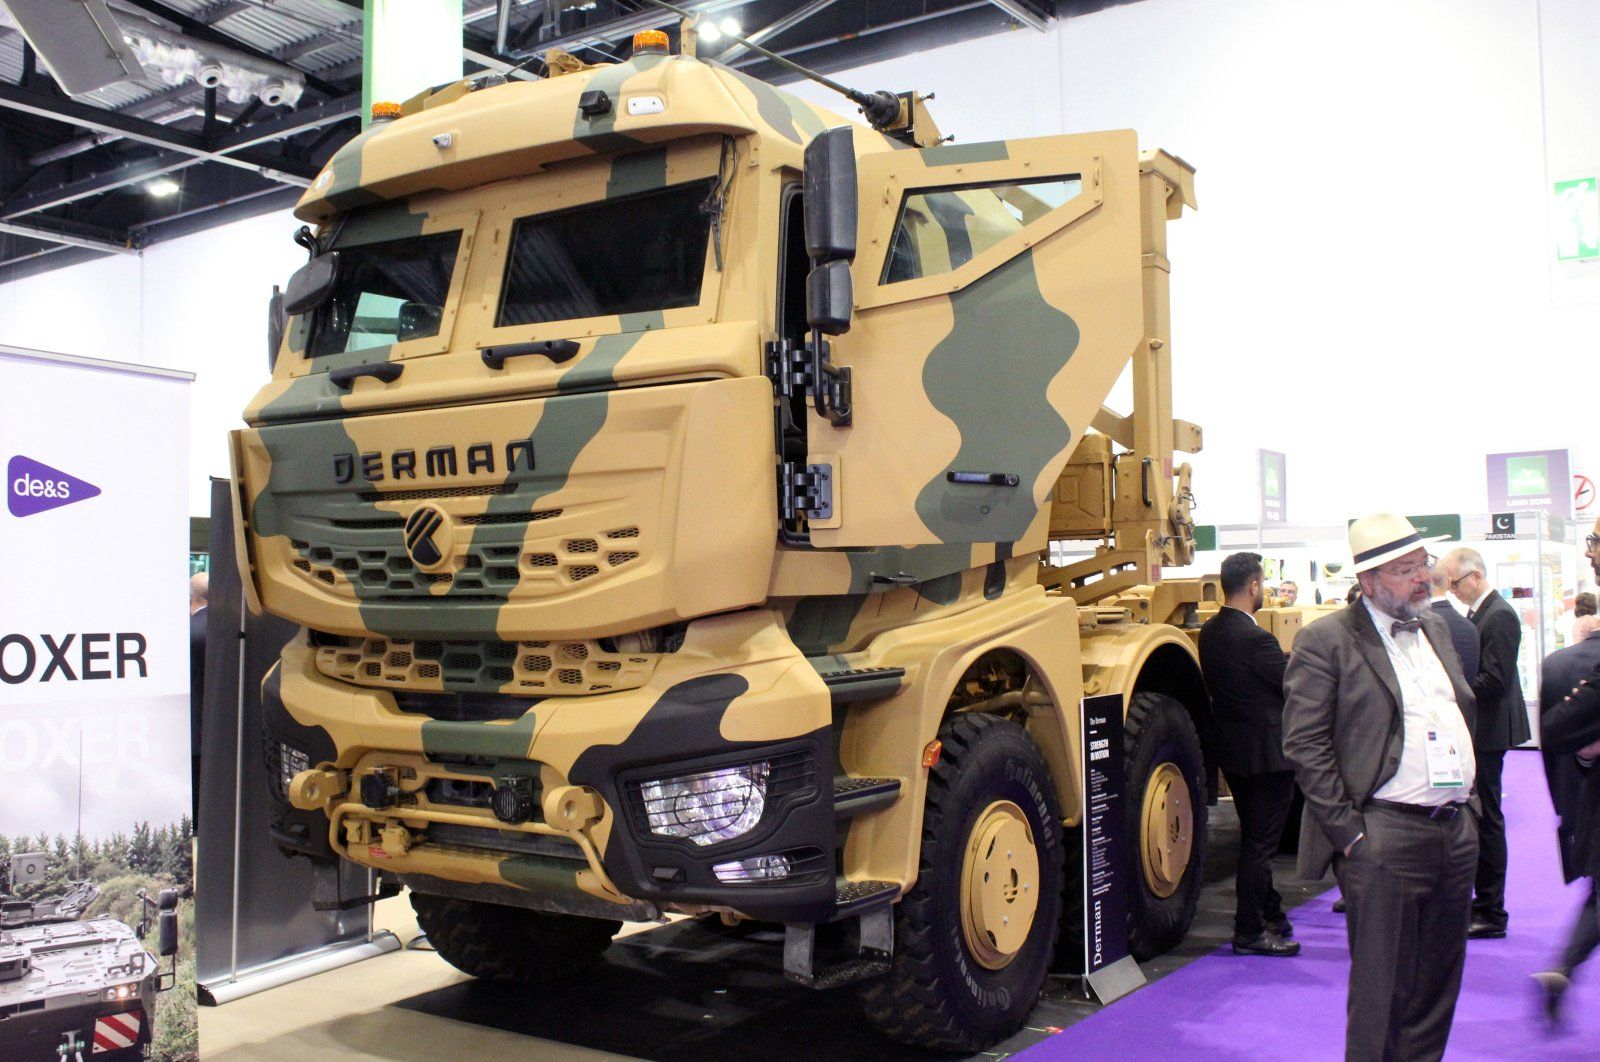 Turkish armored logistics vehicle 'Derman' makes int'l debut in UK